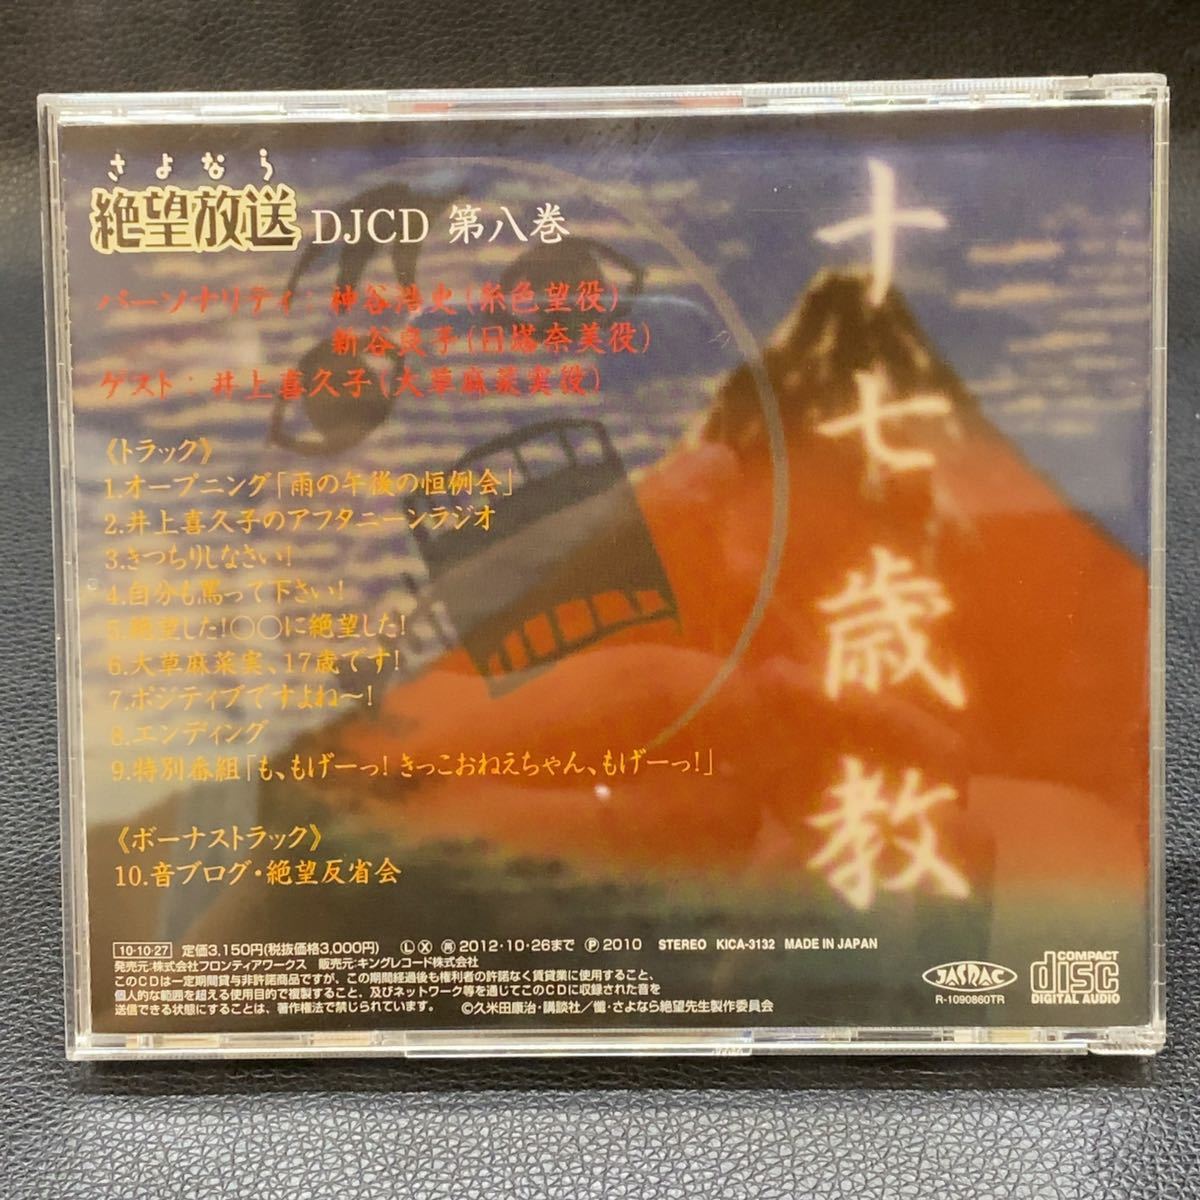 [ beautiful goods ]DJCD.. if .. broadcast no. . volume god .. history new . good . drama CD.. if ... raw anime rare rare CD obi attaching 